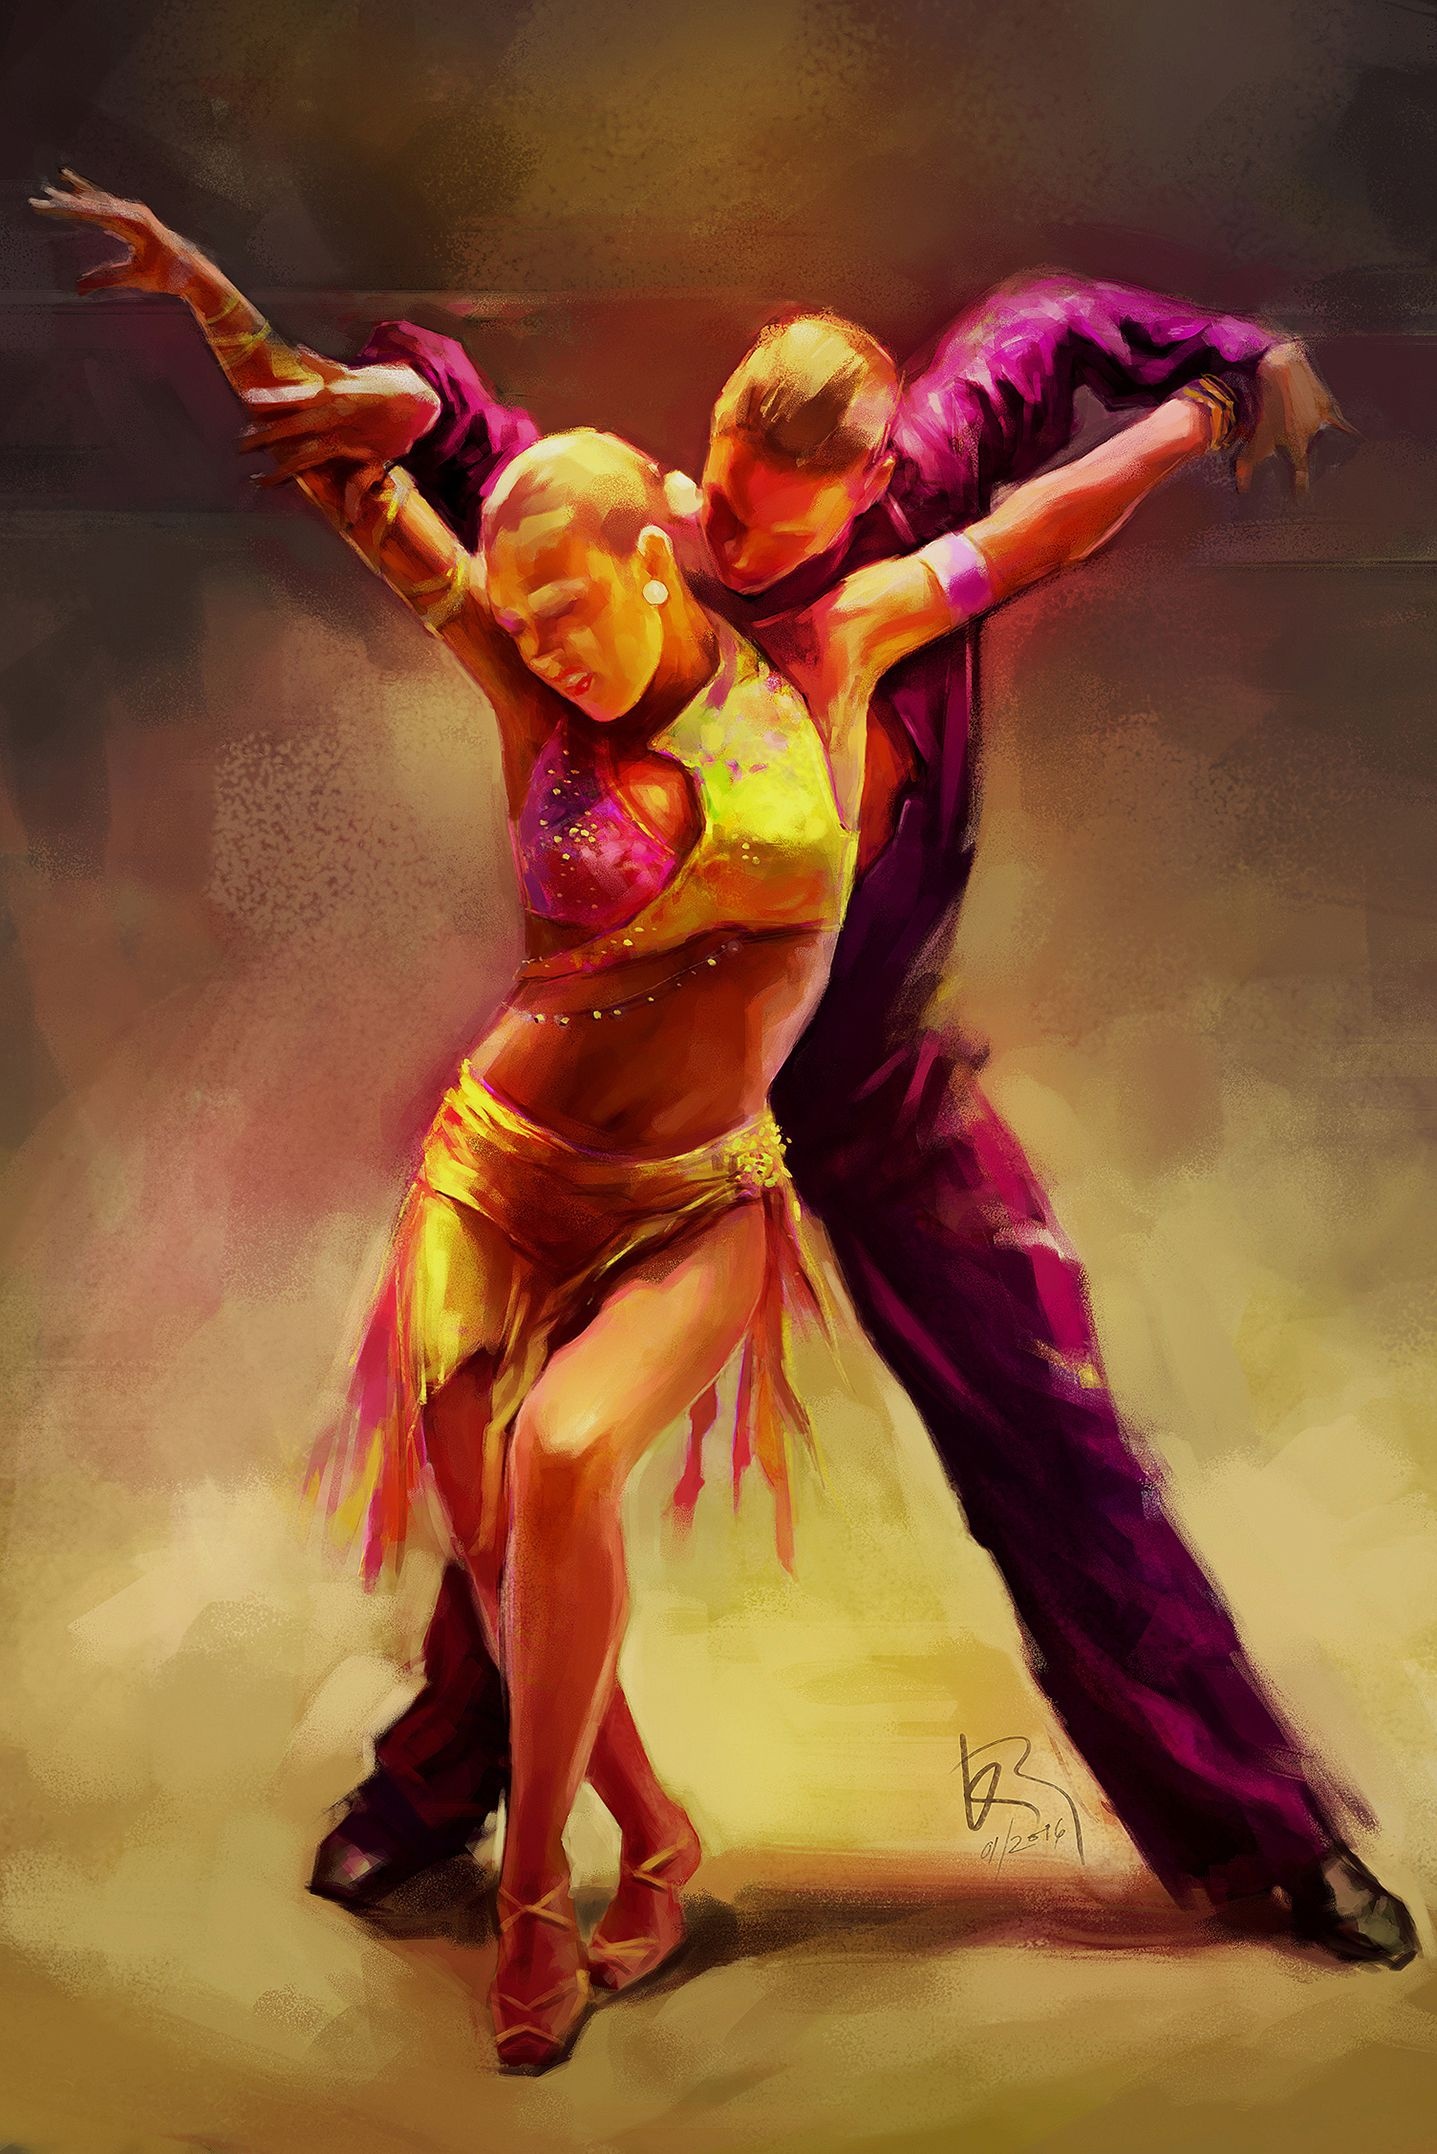 Rumba: Dance Artwork, Sensual Dance, Dancing Couple, Basic Steps, Dance Sport. 1440x2160 HD Wallpaper.